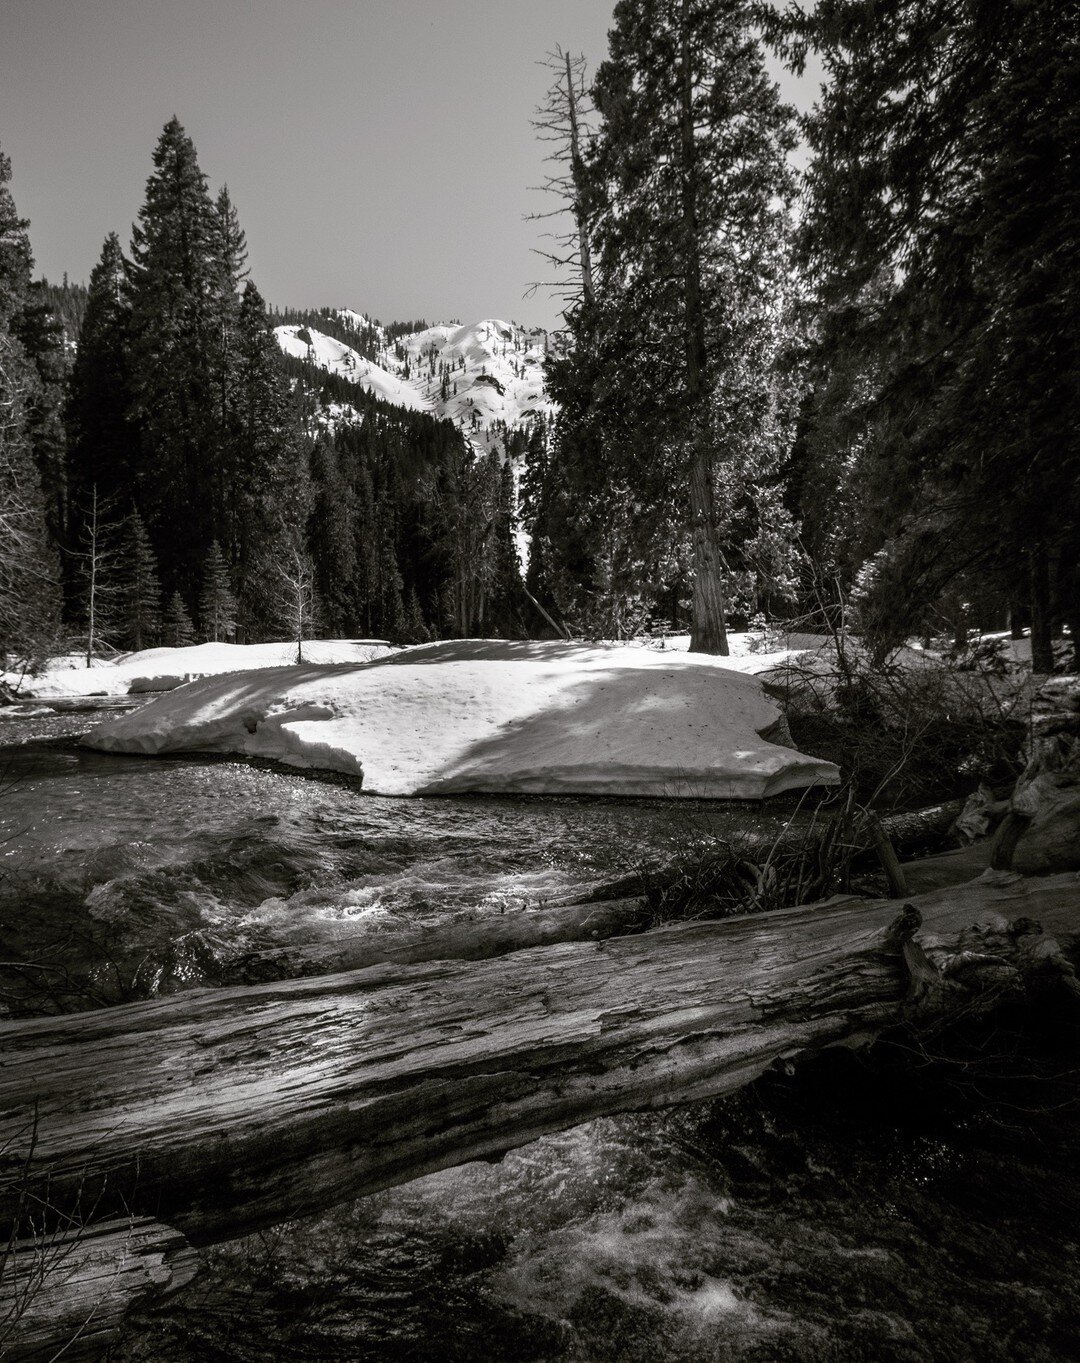 Mount Washington via Jamison Creek.... The Lost Sierra

#lostsierra #plumasnationalforest #plumascounty #plumaseurekastatepark #getoutside #somewherelostinthewoods #blackandwhitephotography #landscapephotography #bwphotography #mountains #fujifilm #f